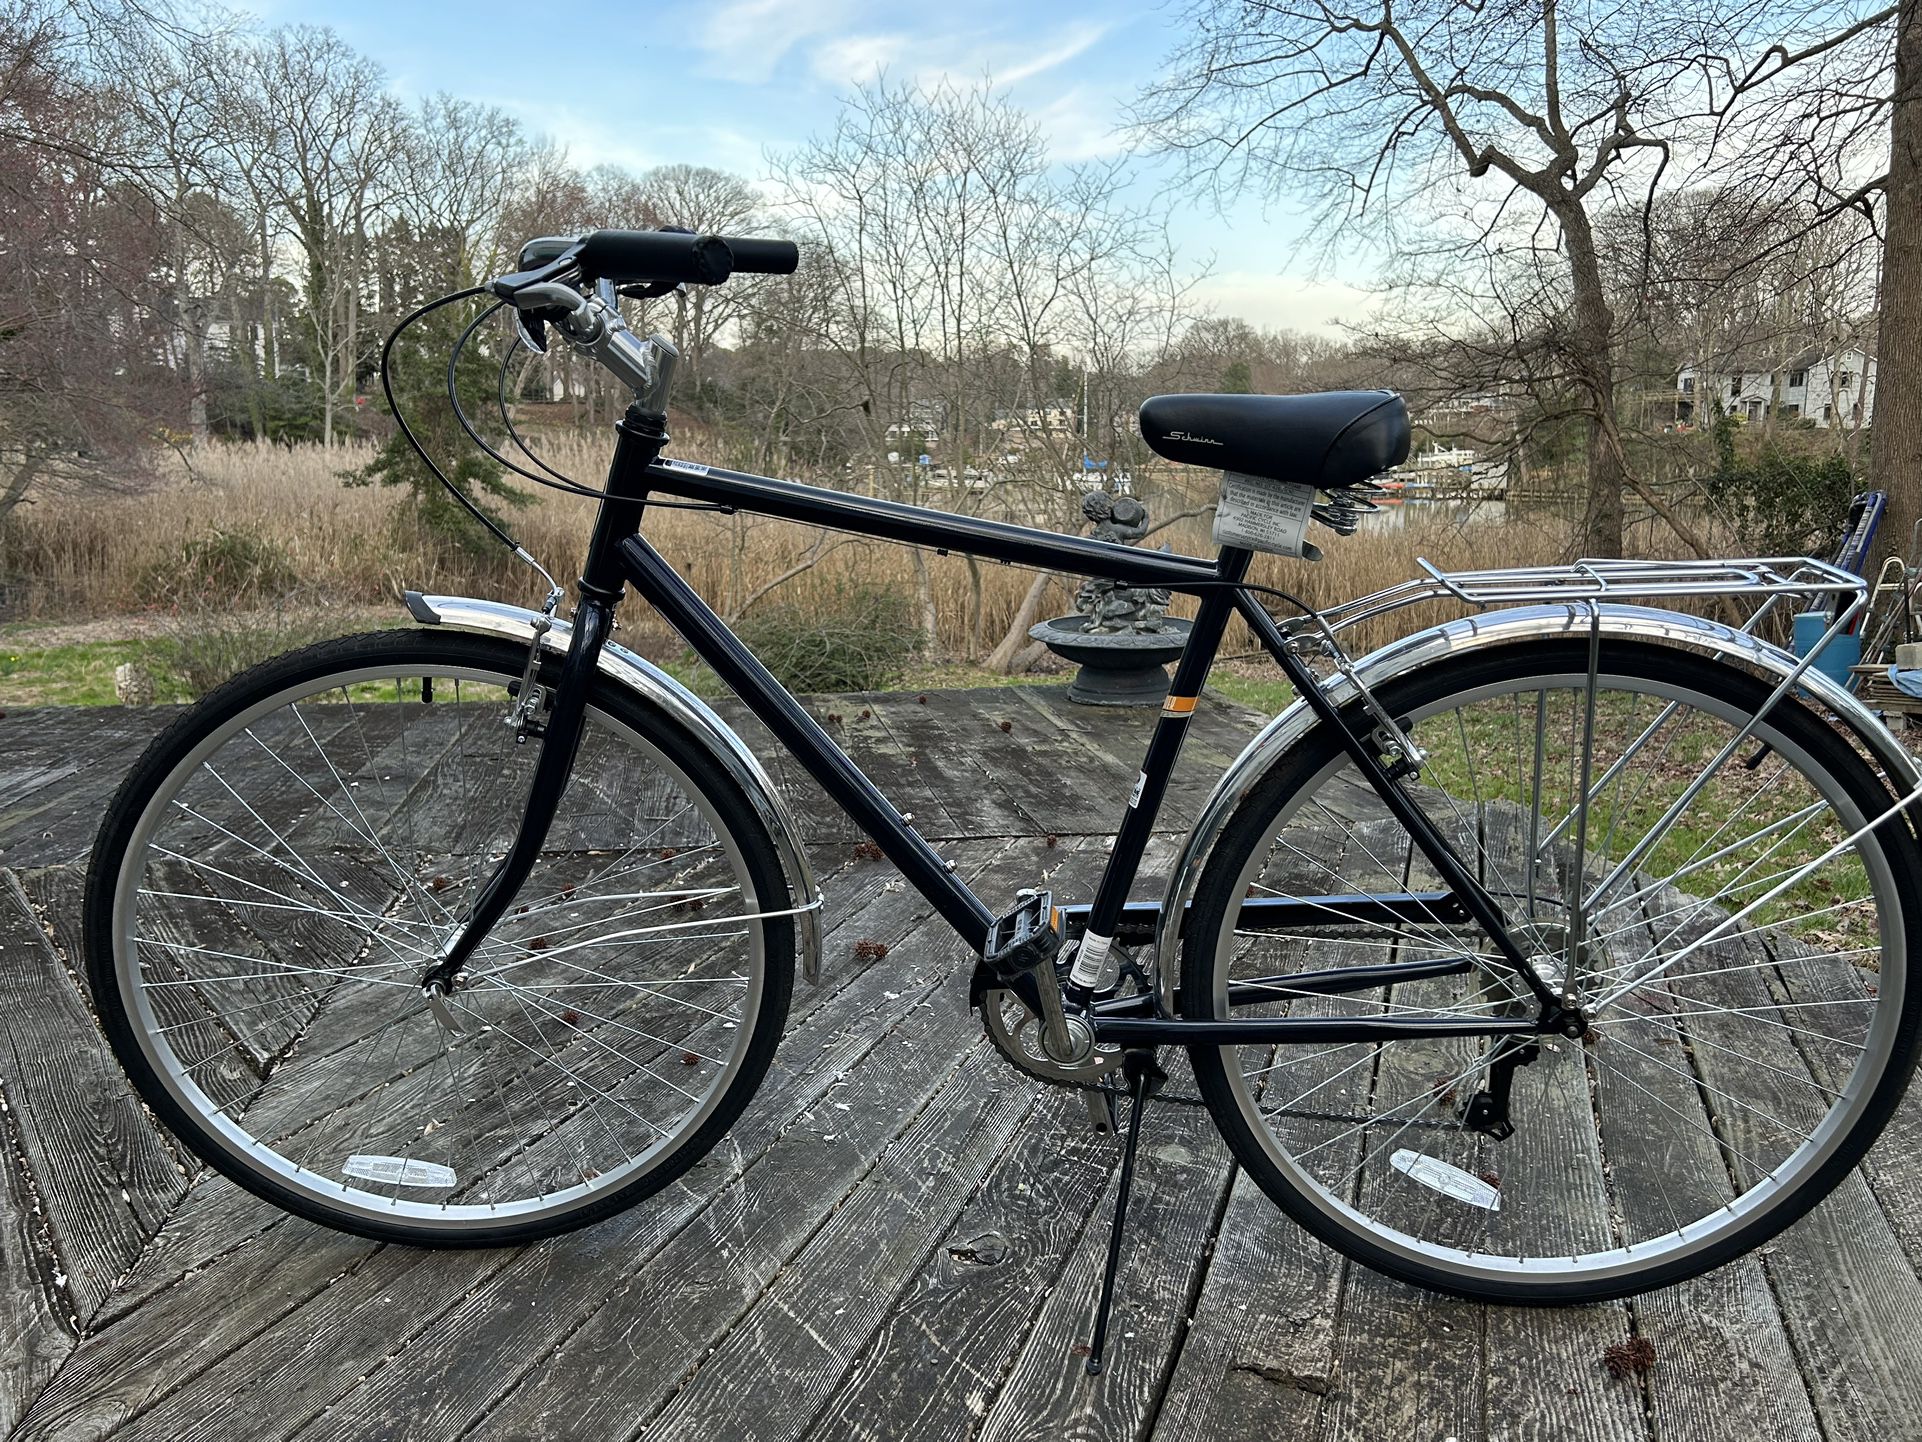 18” Schwinn Wayfarer hybrid bicycle